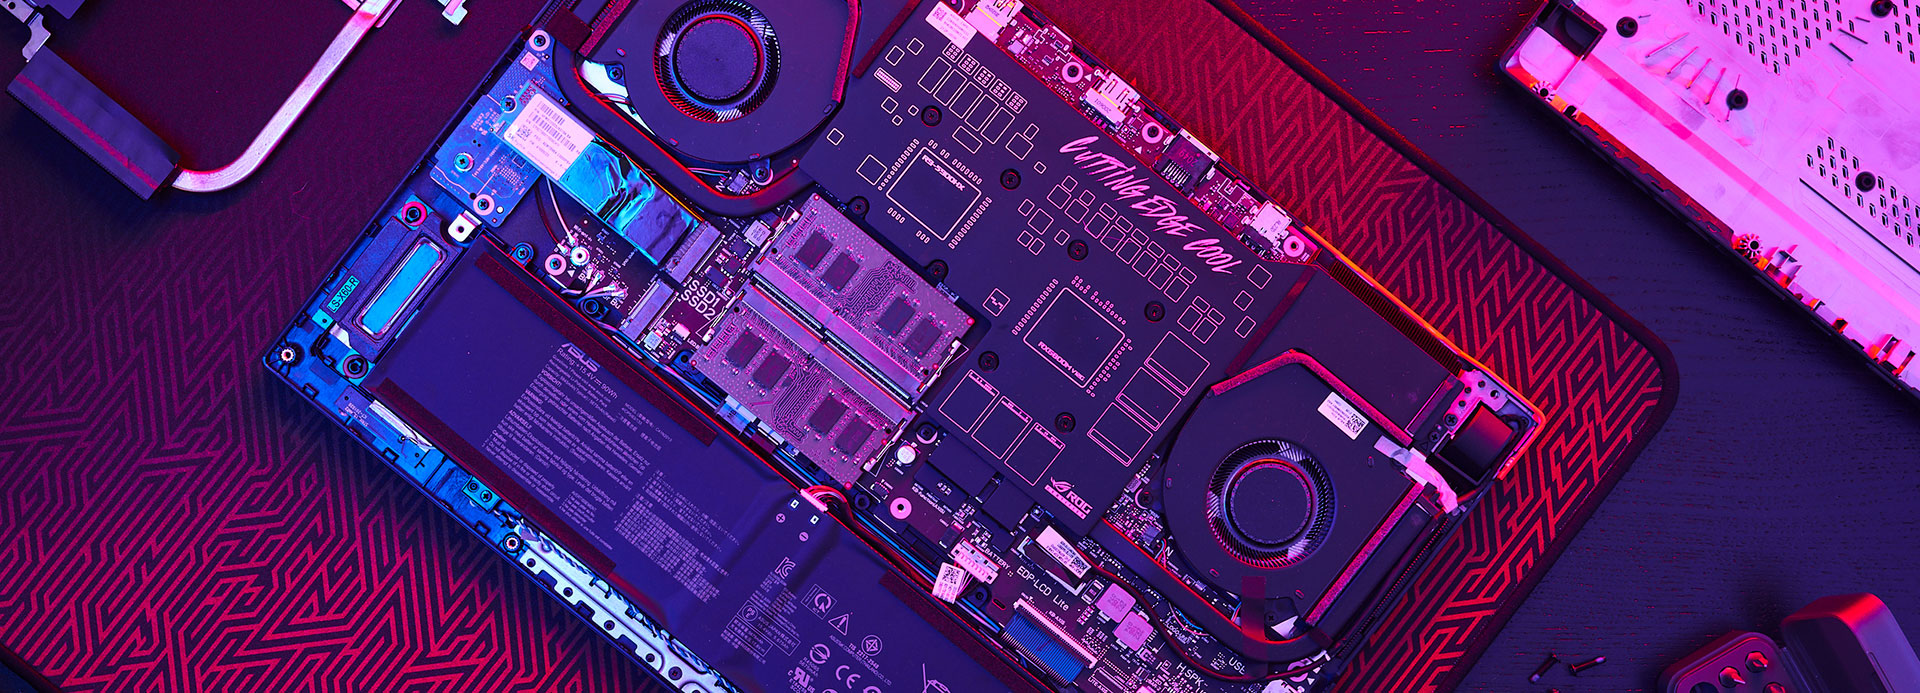 AMD Advantage laptops are built on AMD Ryzen + Radeon RX hardware platforms